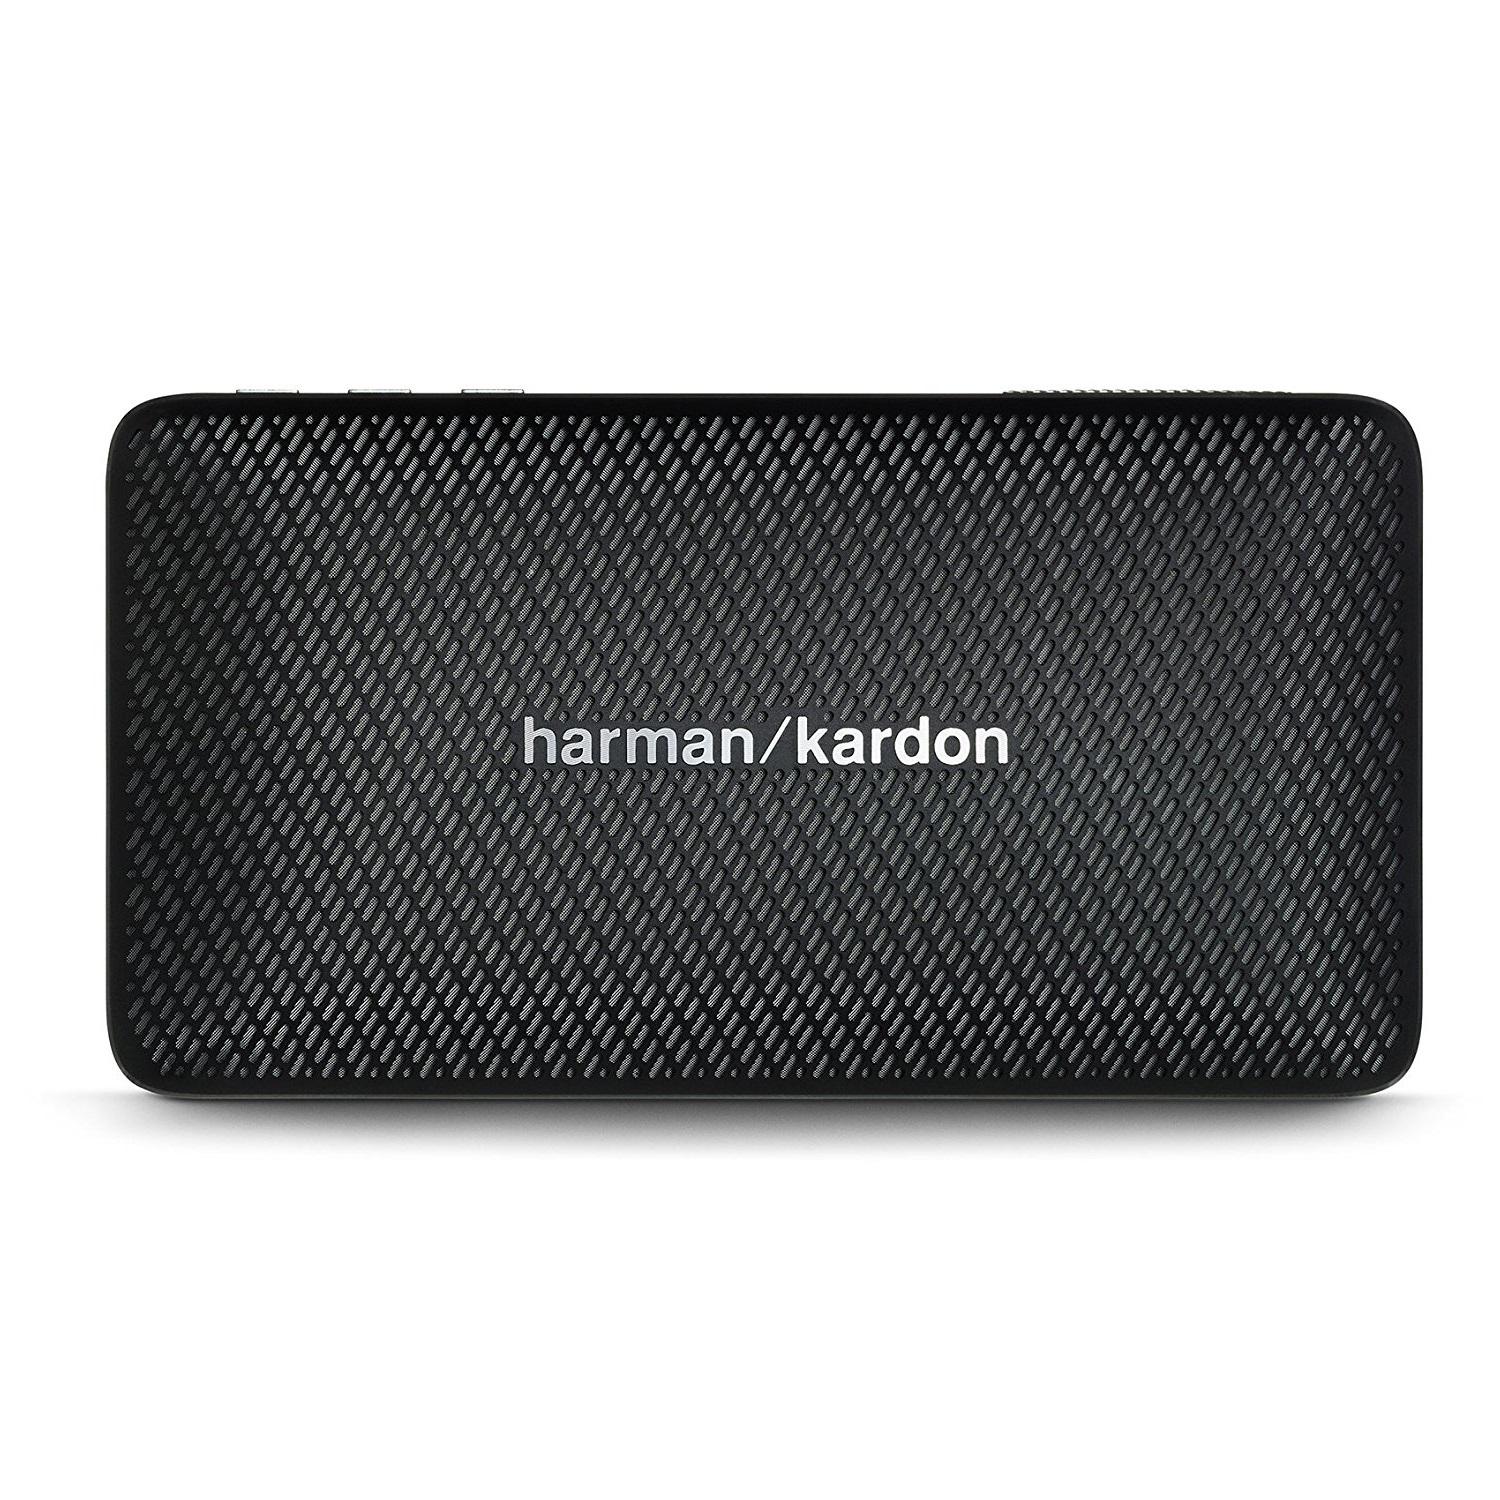 Harman Kardon 哈曼卡顿 Esquire Mini 便携无线音箱